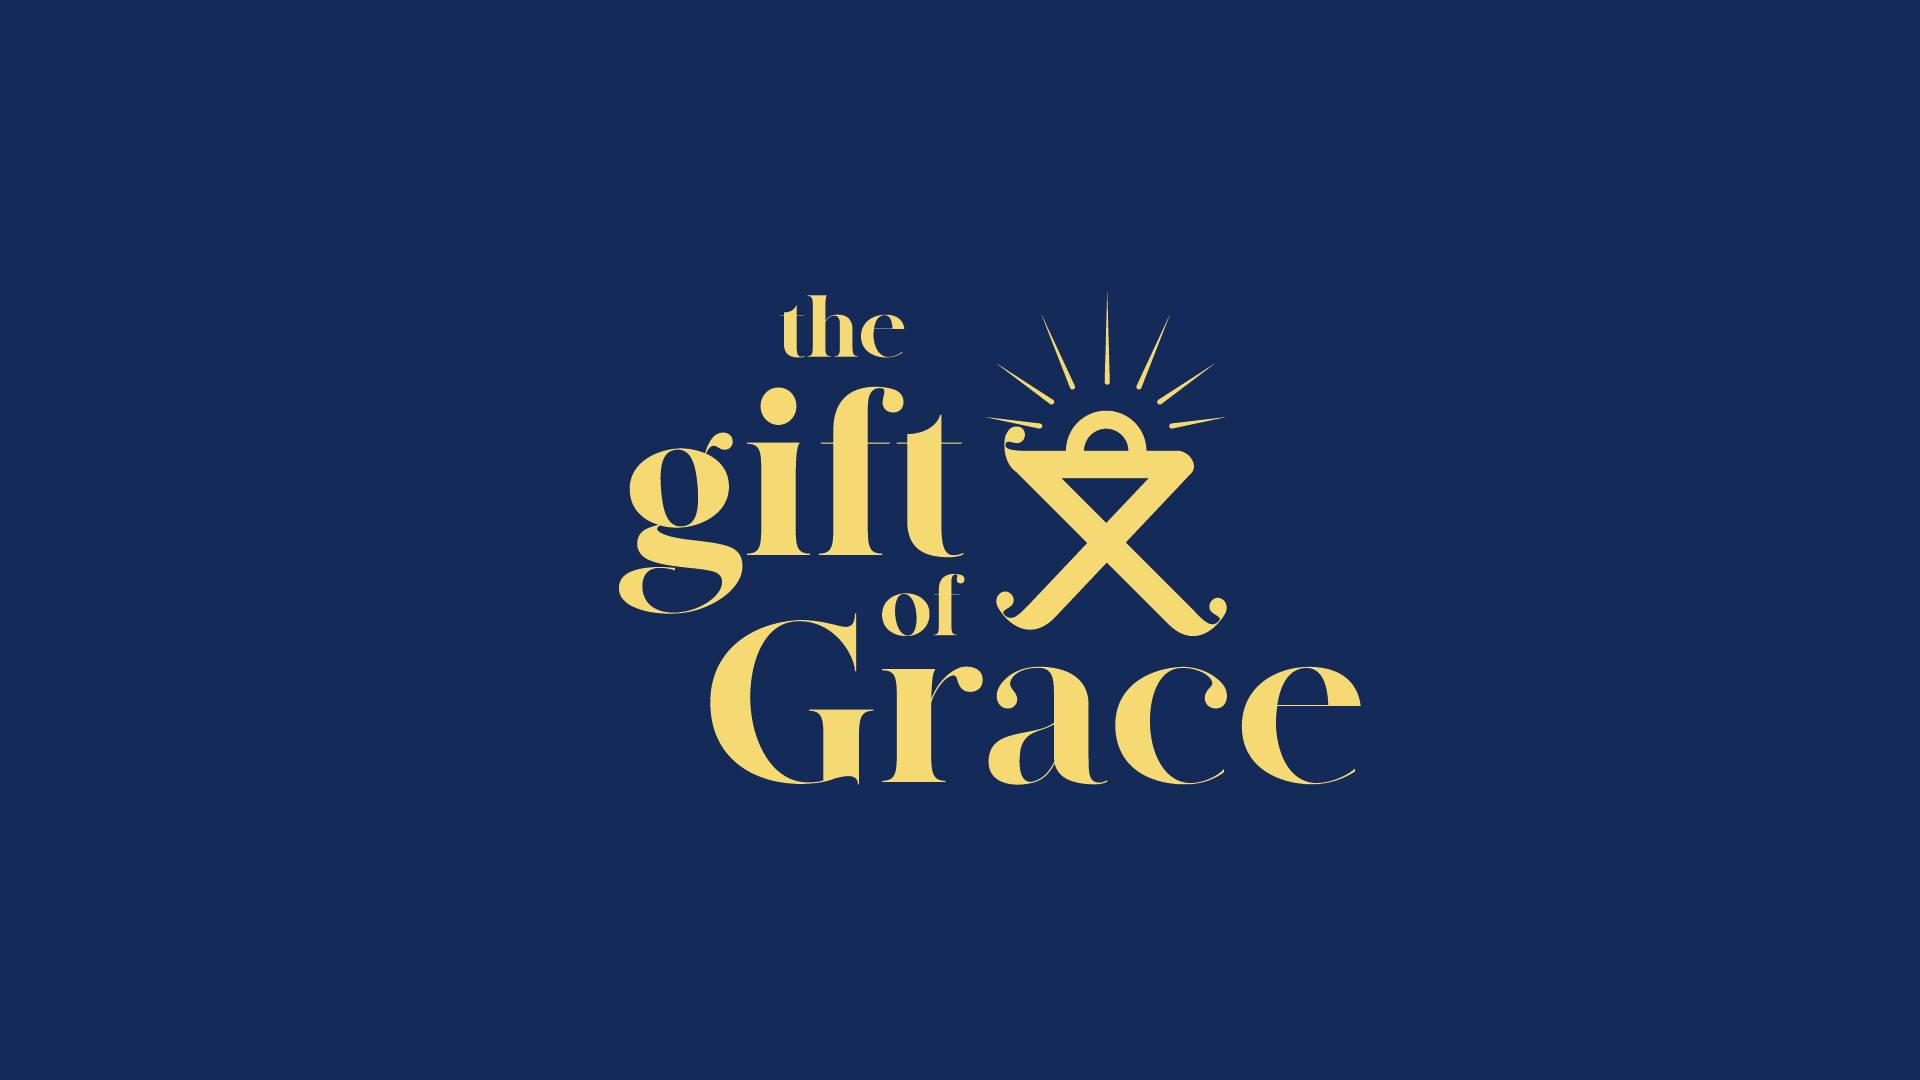 The Gift of Grace (2 Corinthians 8:9)